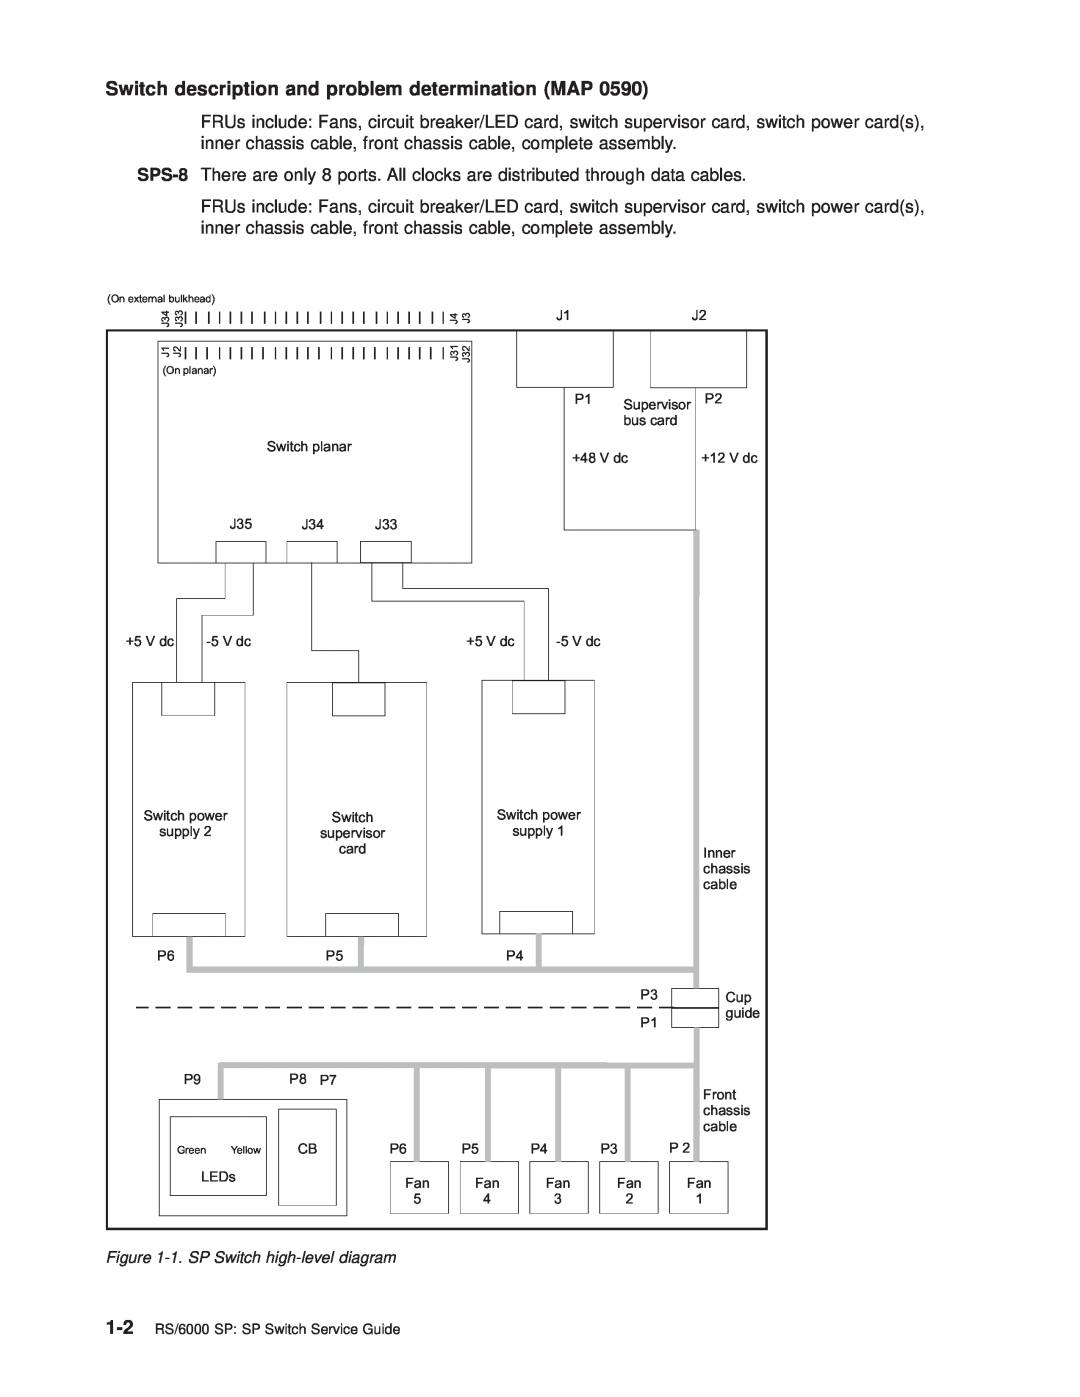 IBM RS/6000 SP manual Switch description and problem determination MAP, 1. SP Switch high-level diagram 